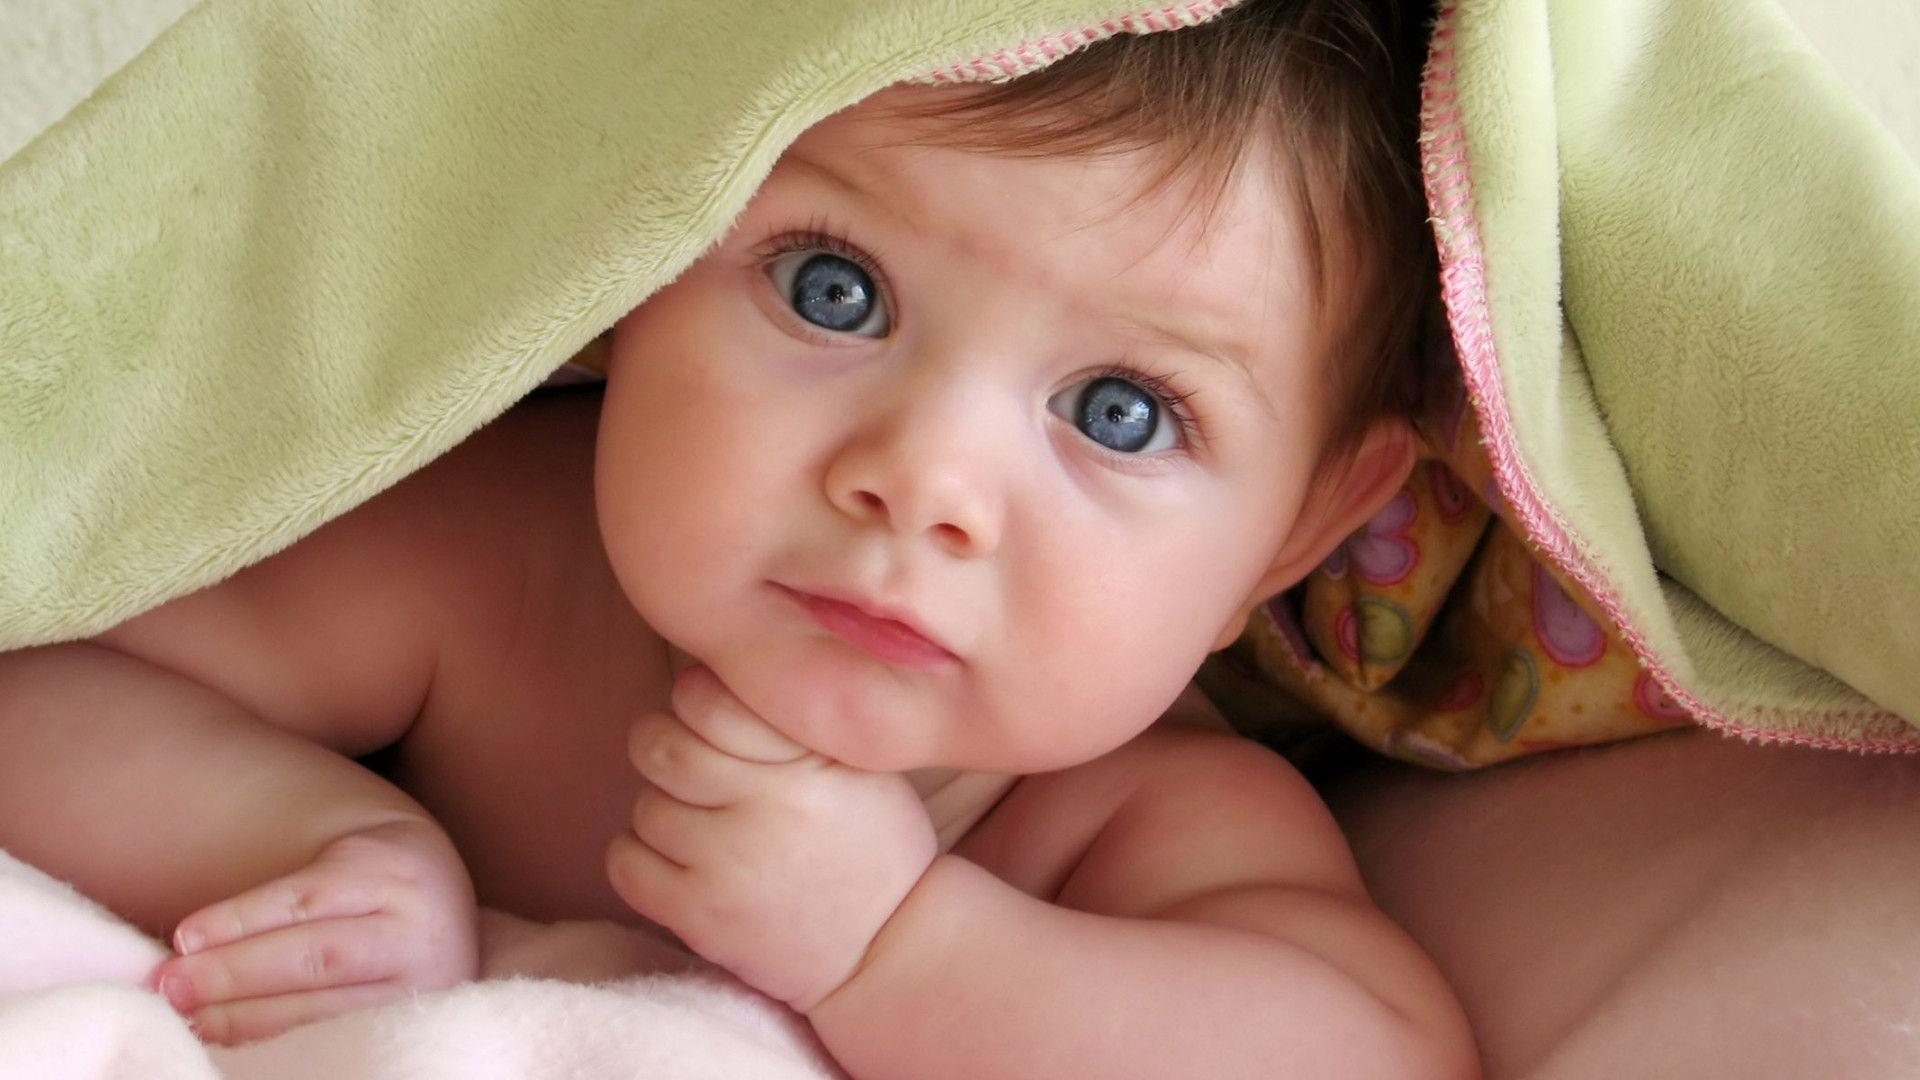 Baby Desktop Wallpaper: Cute Baby Desktop Wallpaper. .Ssofc